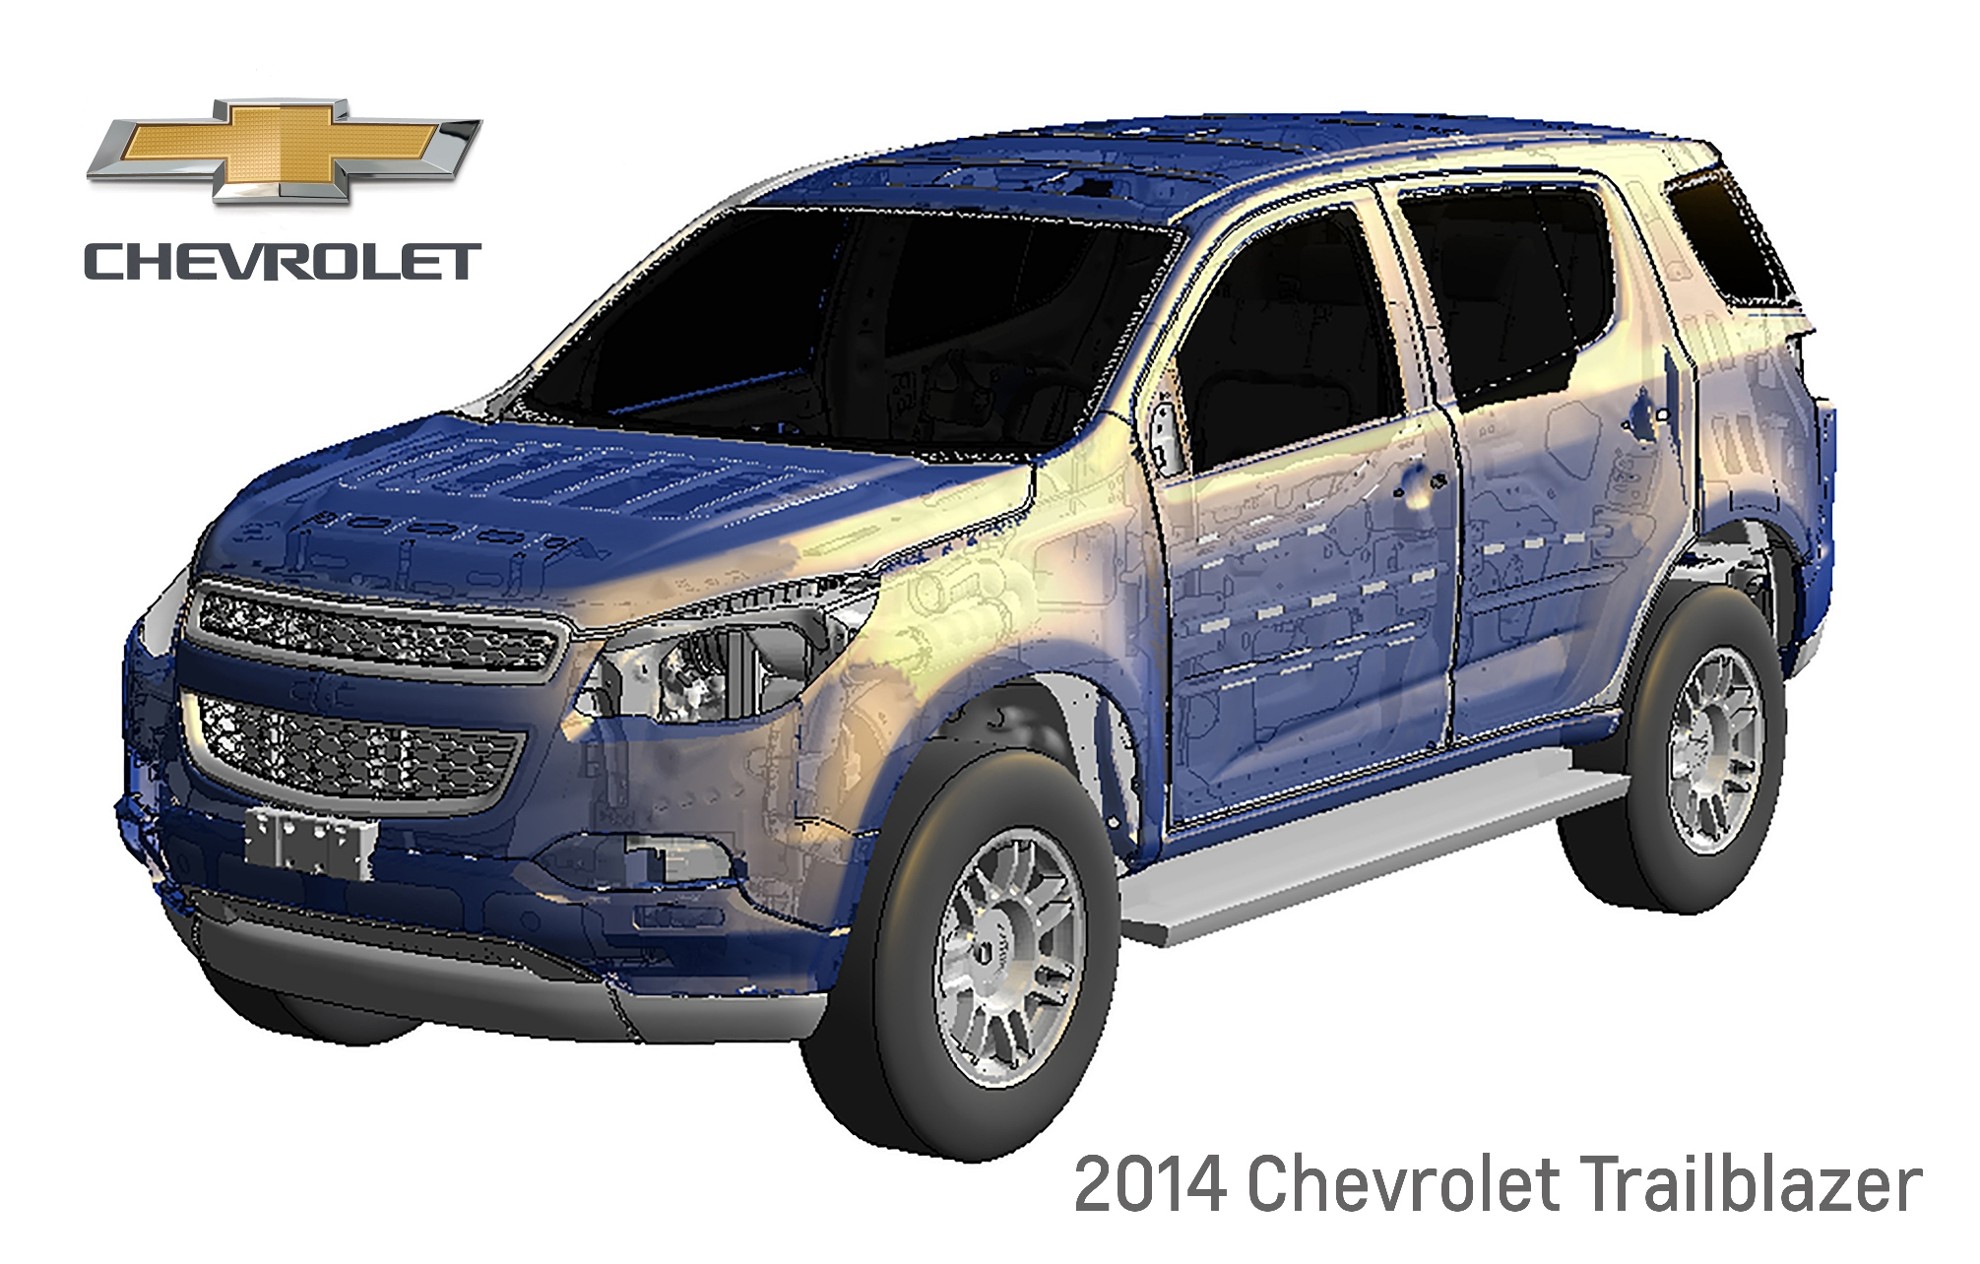 Chevrolet Trailblazer Off-Road Ready